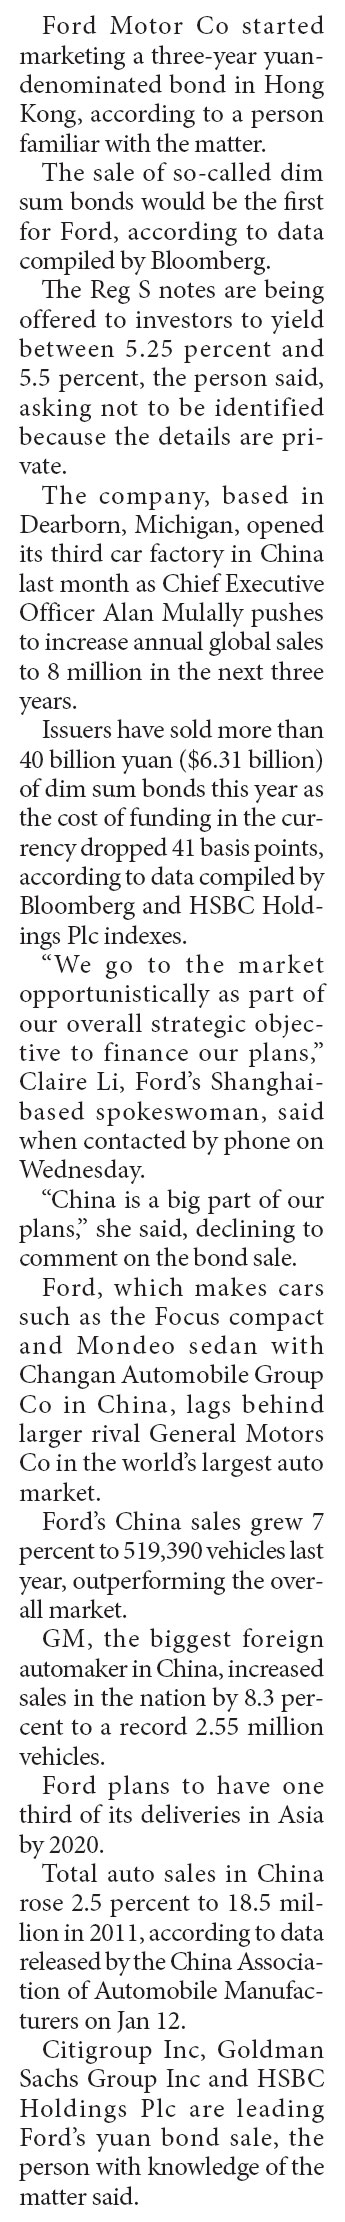 Ford Motor to market yuan bond sale in HK